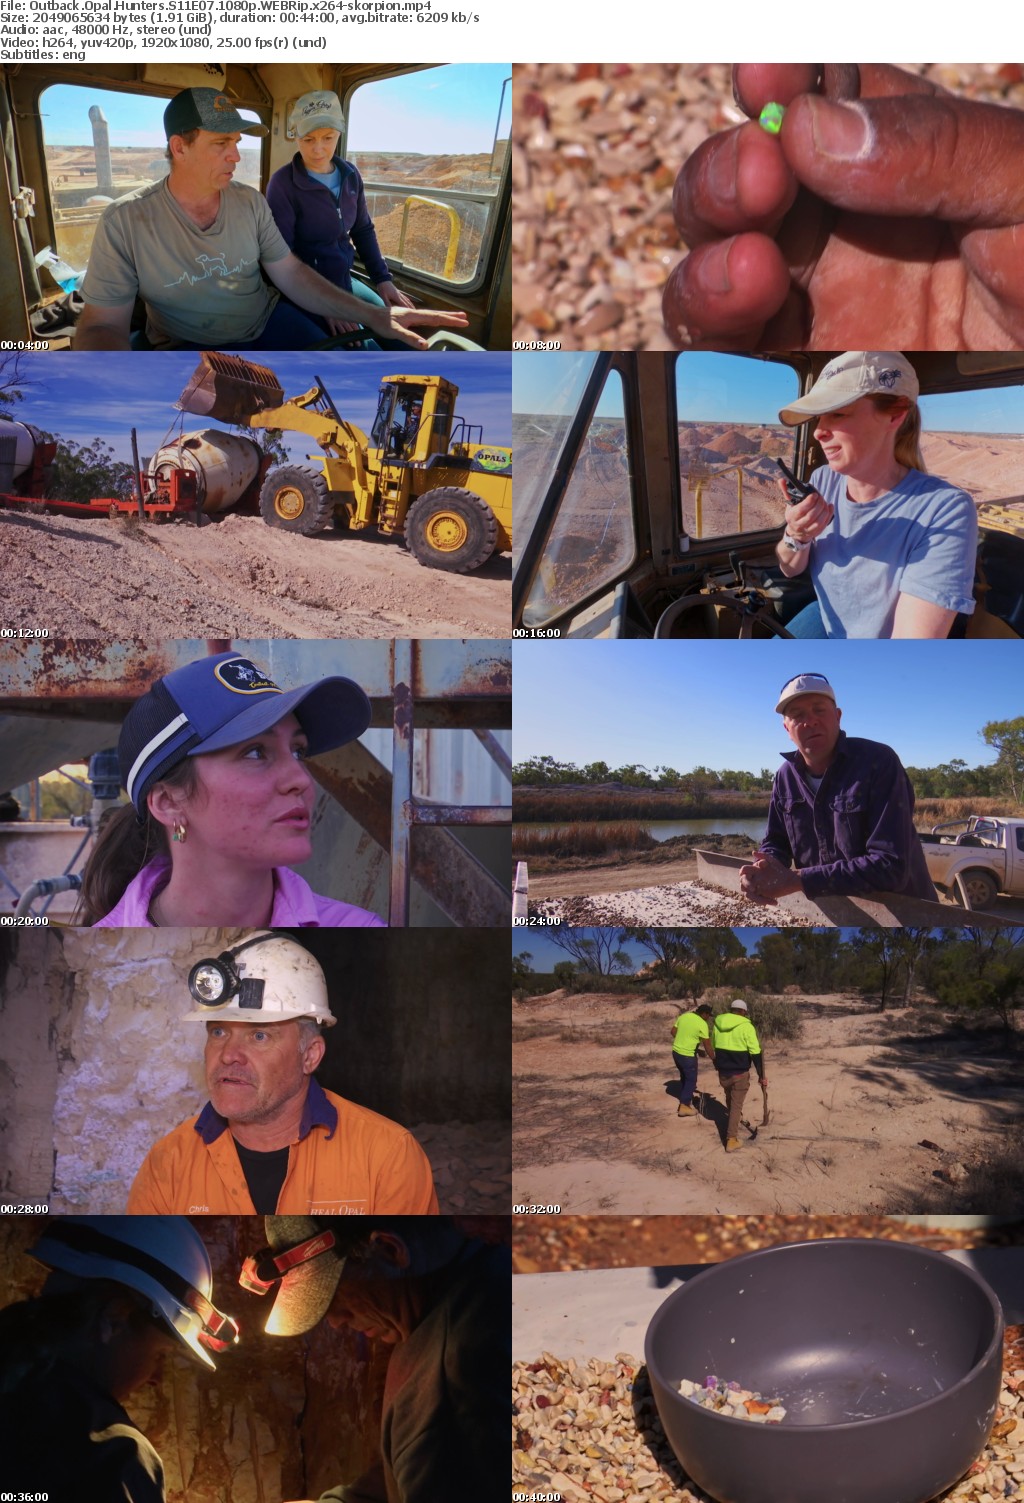 Outback Opal Hunters S11E07 1080p WEBRip x264-skorpion mp4